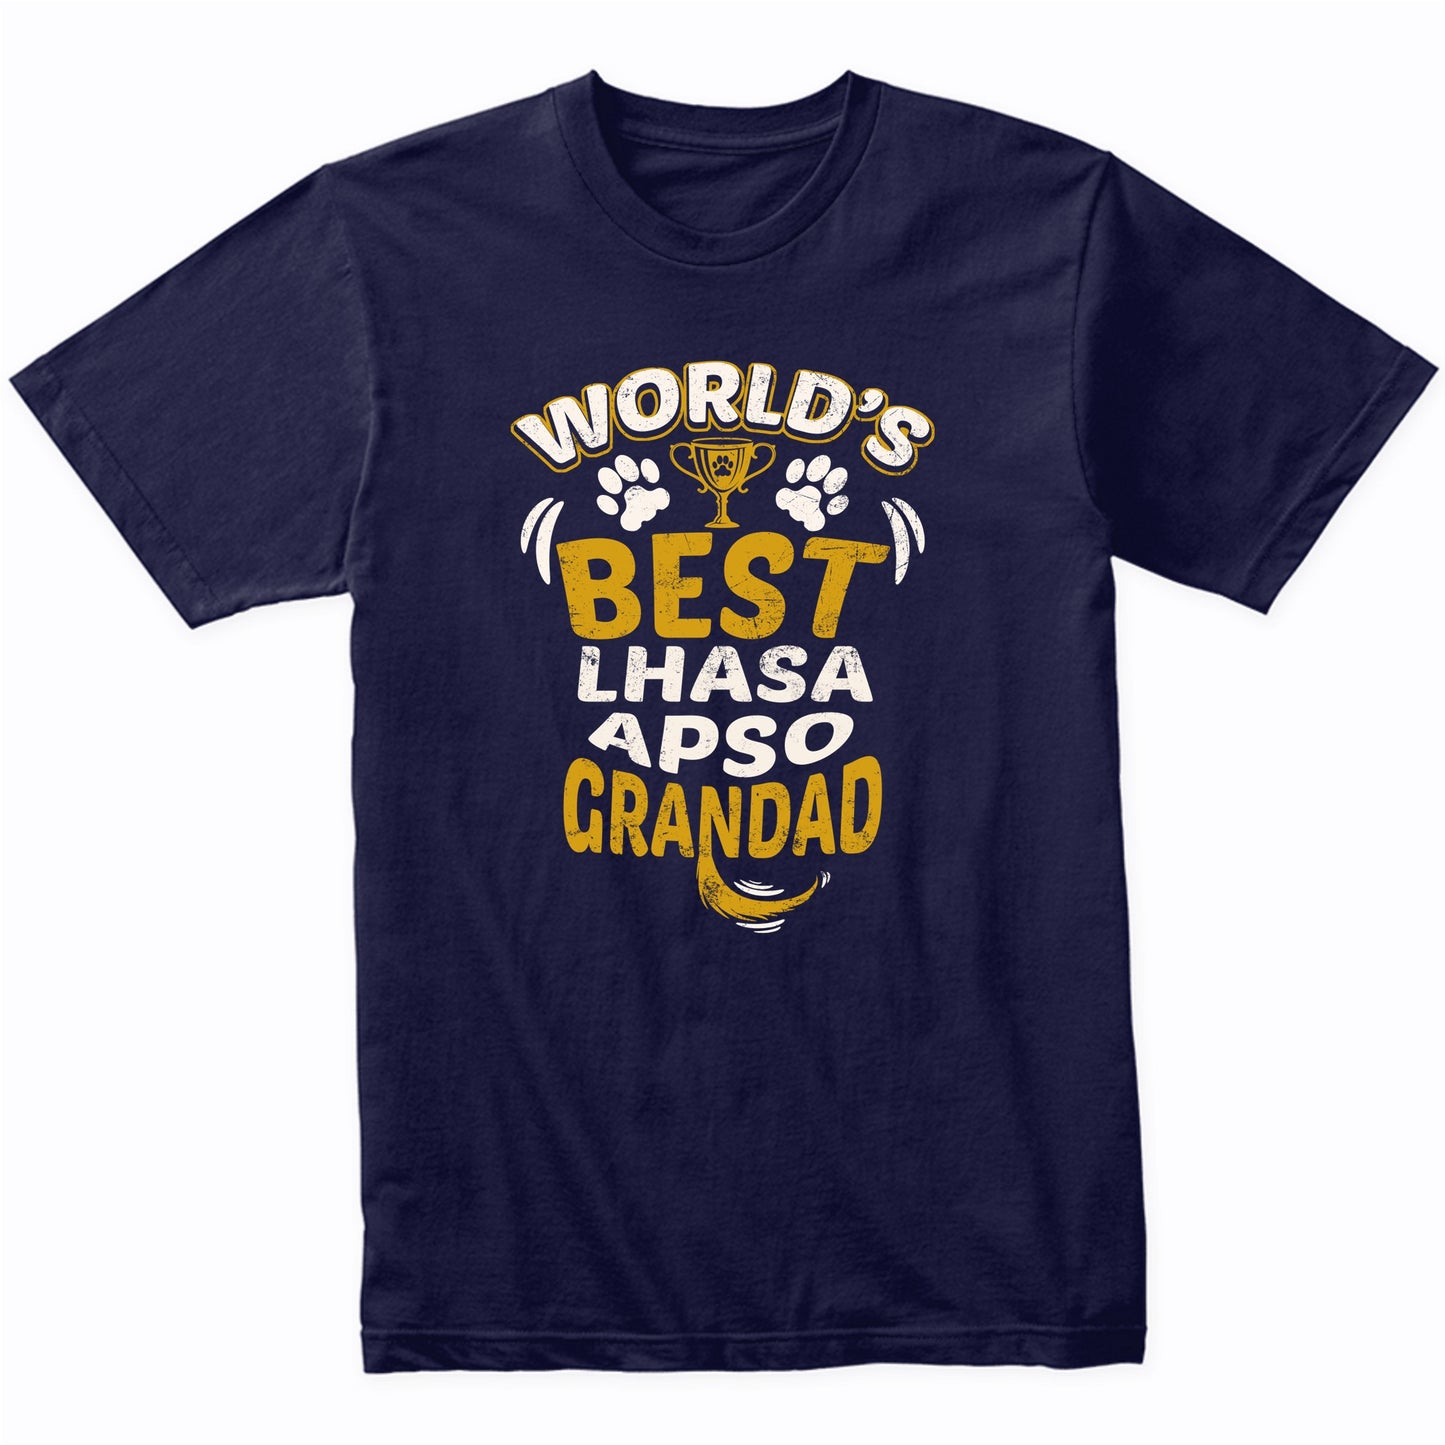 World's Best Lhasa Apso Grandad Graphic T-Shirt